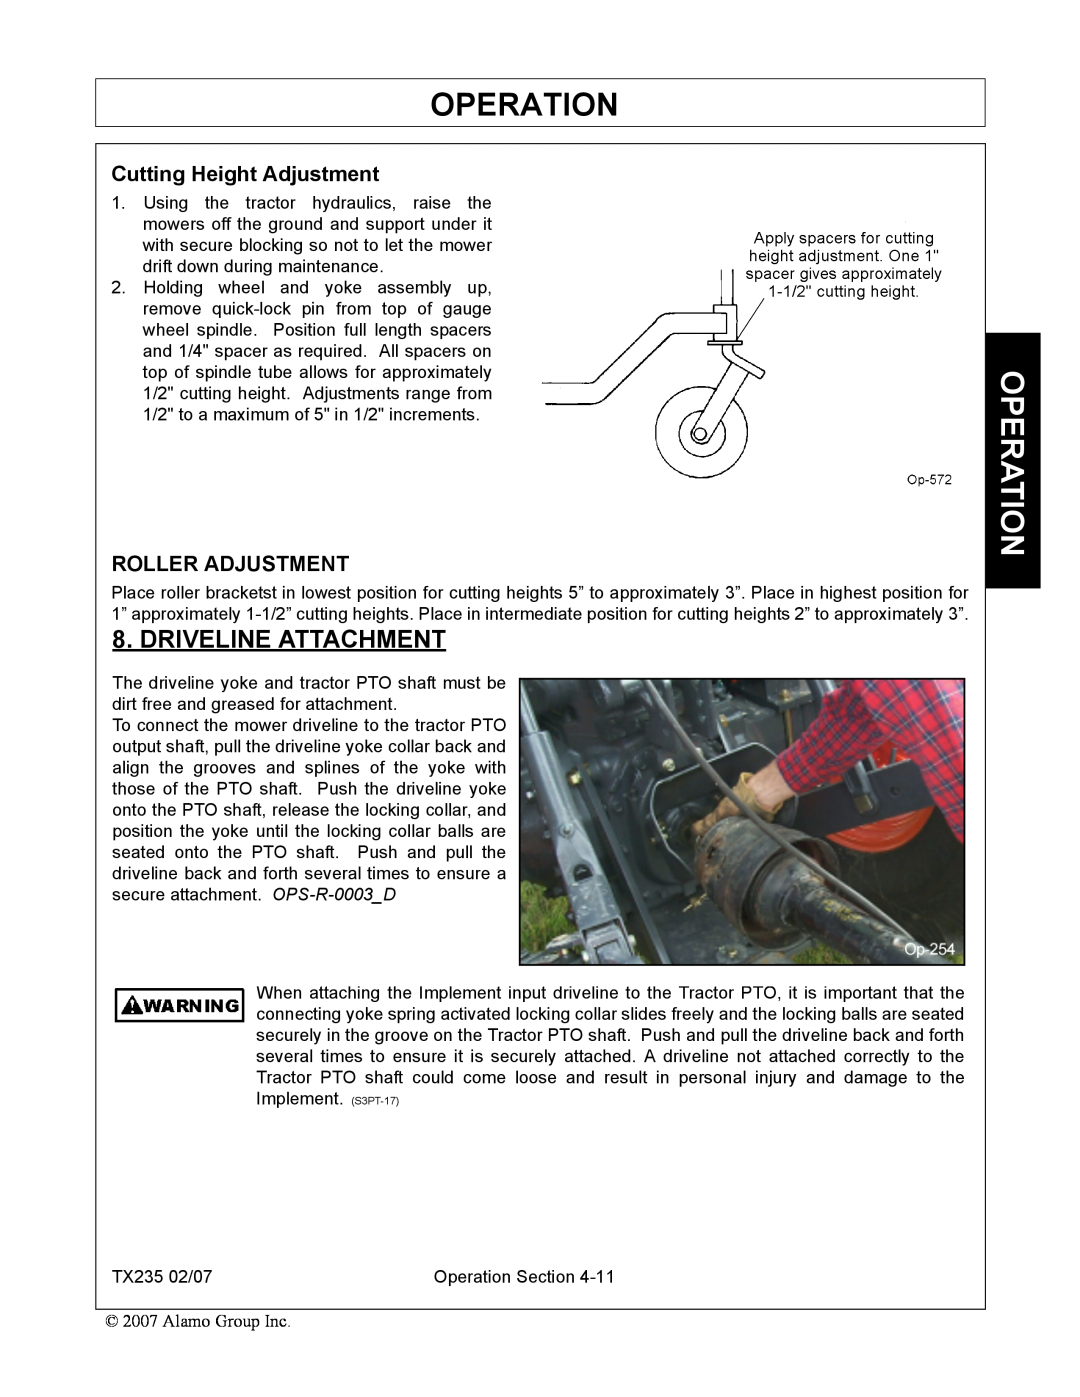 Alamo TX235 manual Driveline Attachment, Cutting Height Adjustment, Roller Adjustment, Operation 